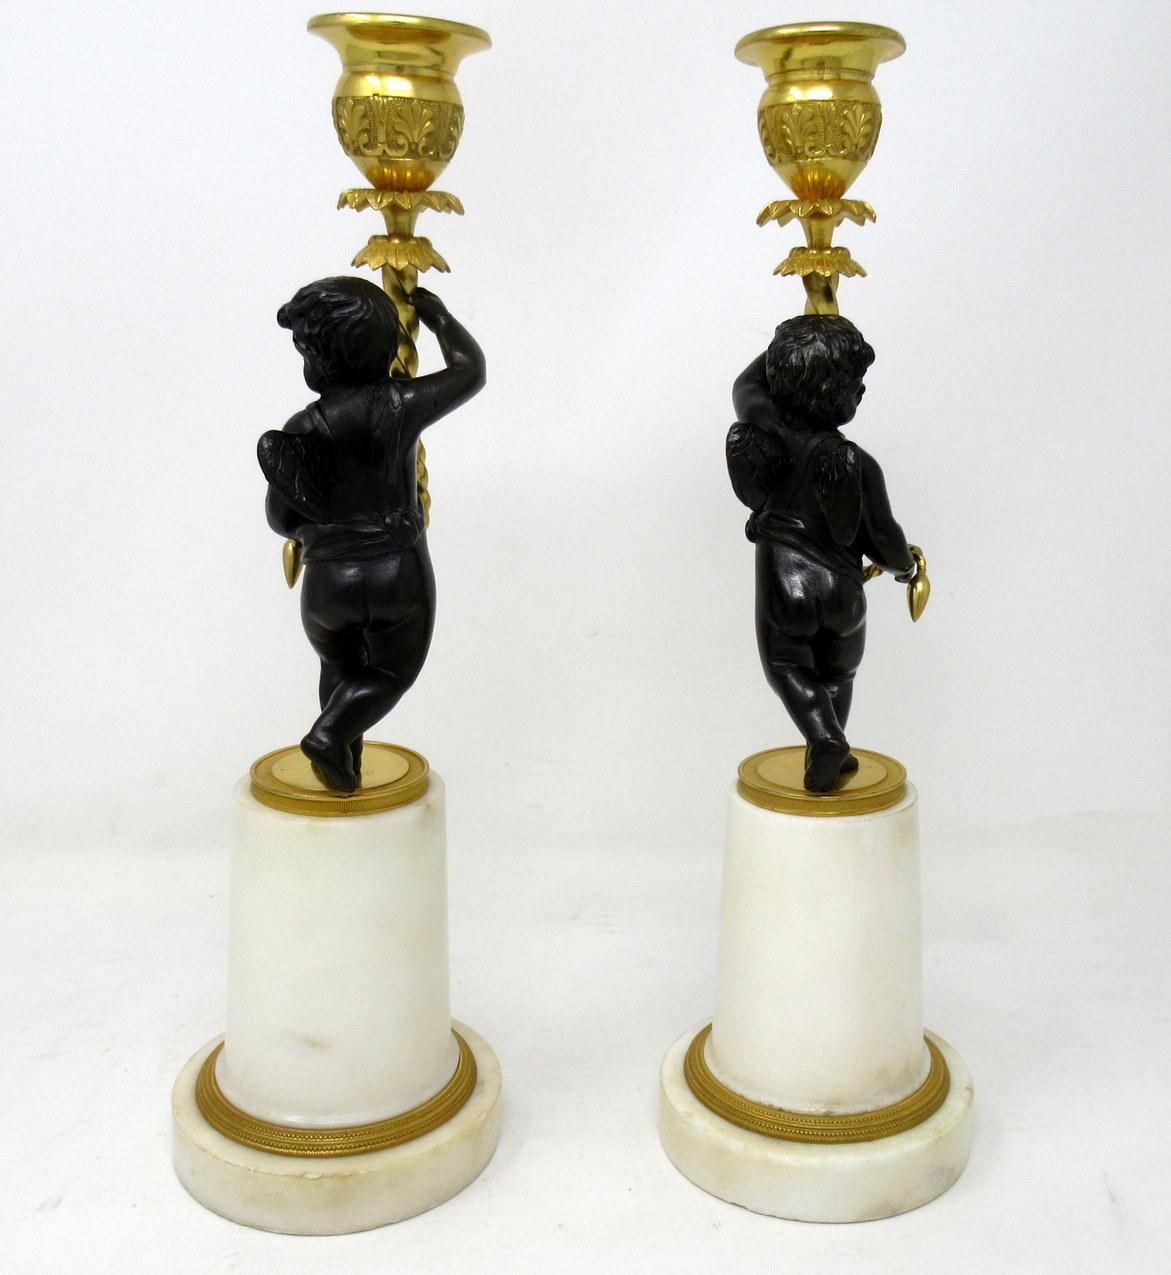 French Antique Pair of Ormolu Bronze Marble Single Light Figural Cherub Candlestick